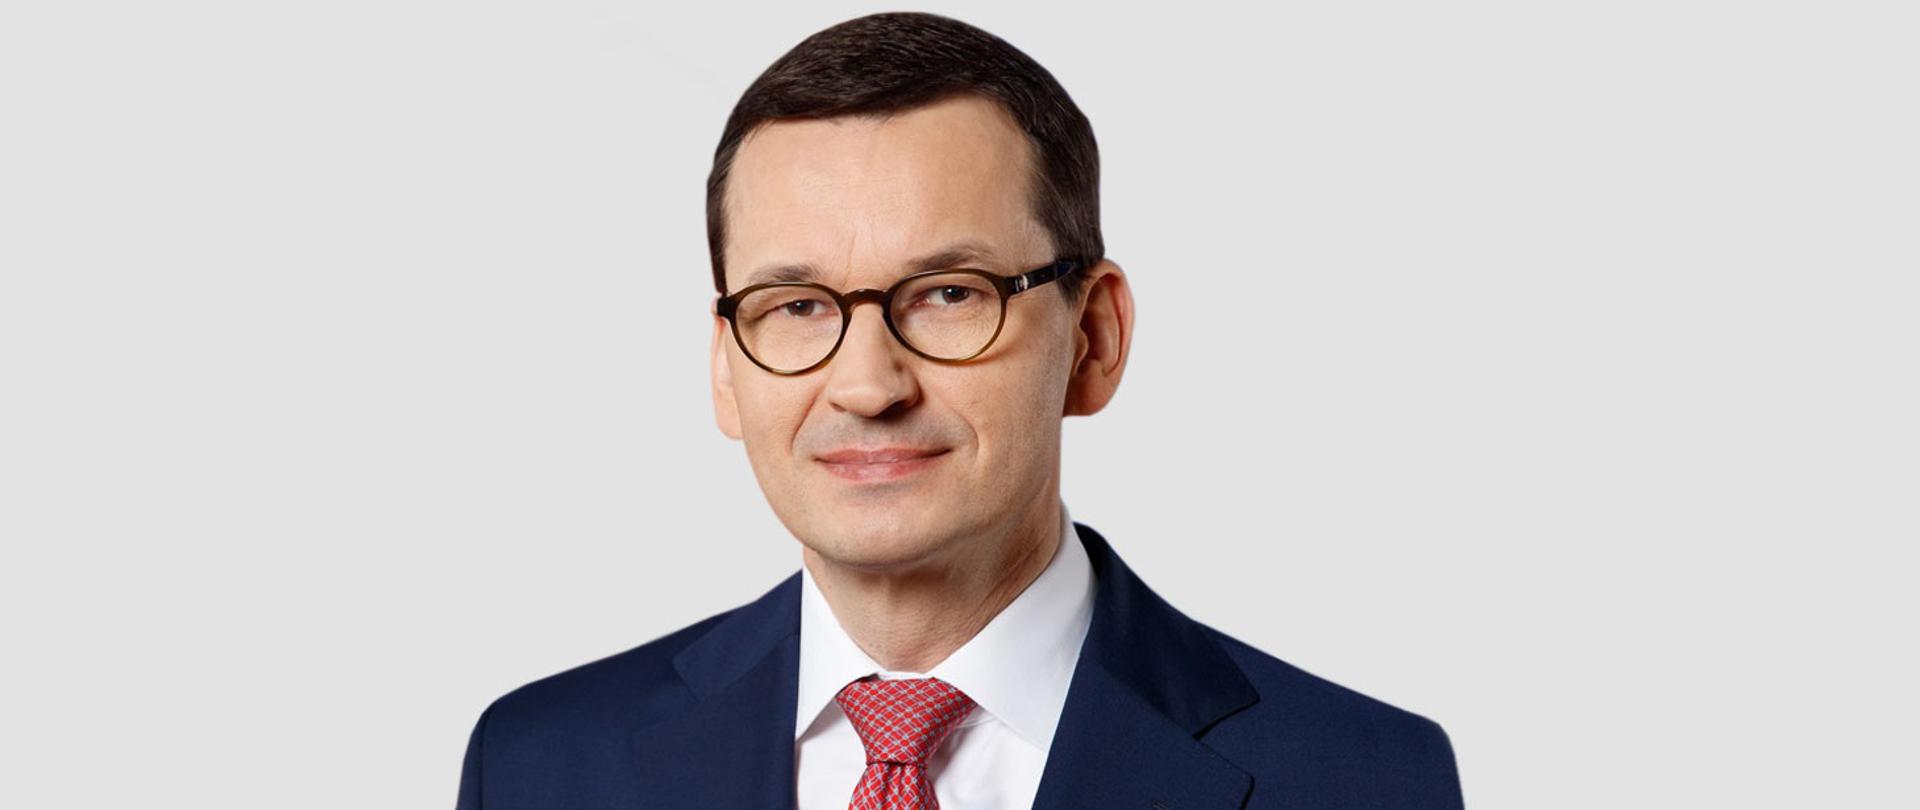 Mateusz Morawiecki - Prime Minister, Minister of Digital Affairs